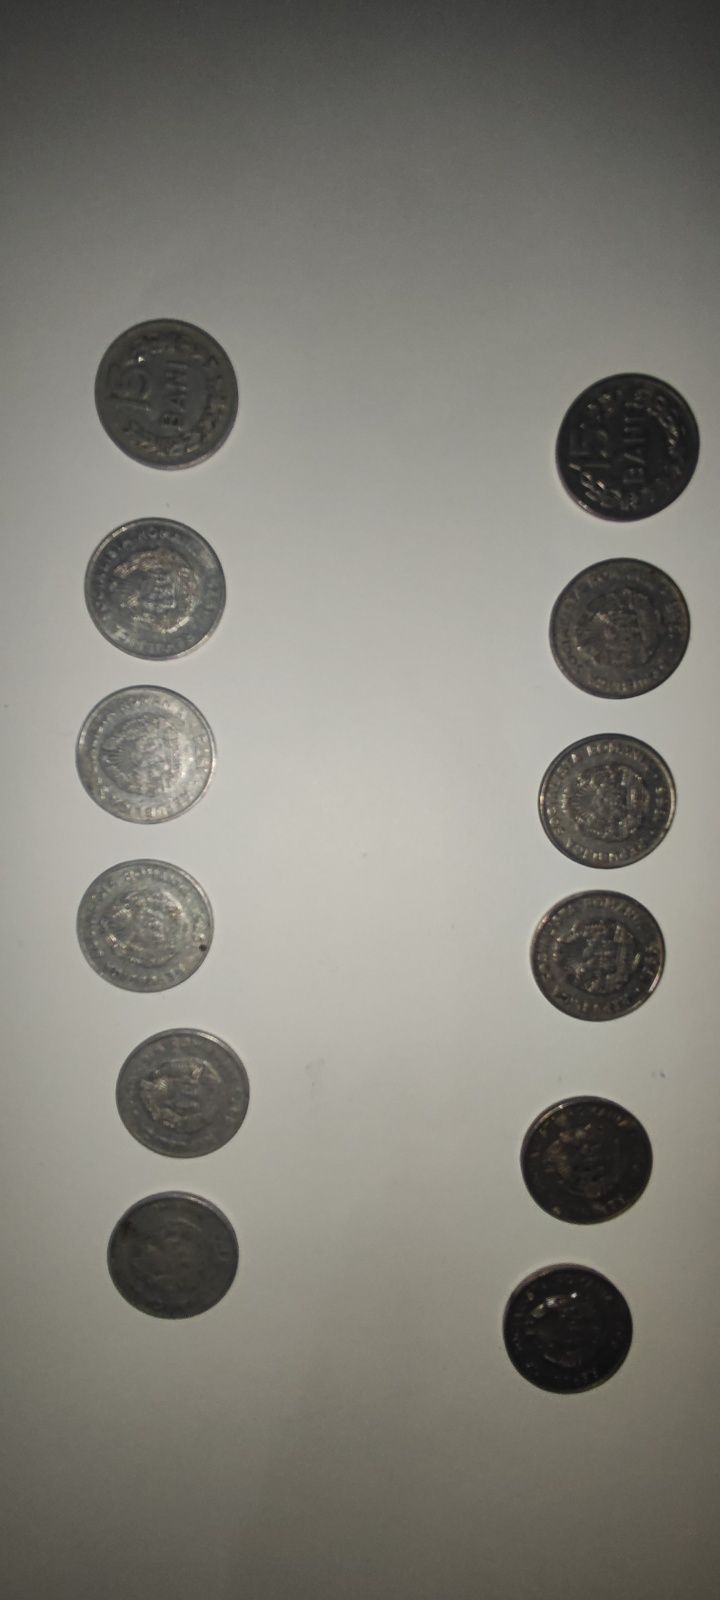 Monede de 15 bani 1975/1966 negociabil